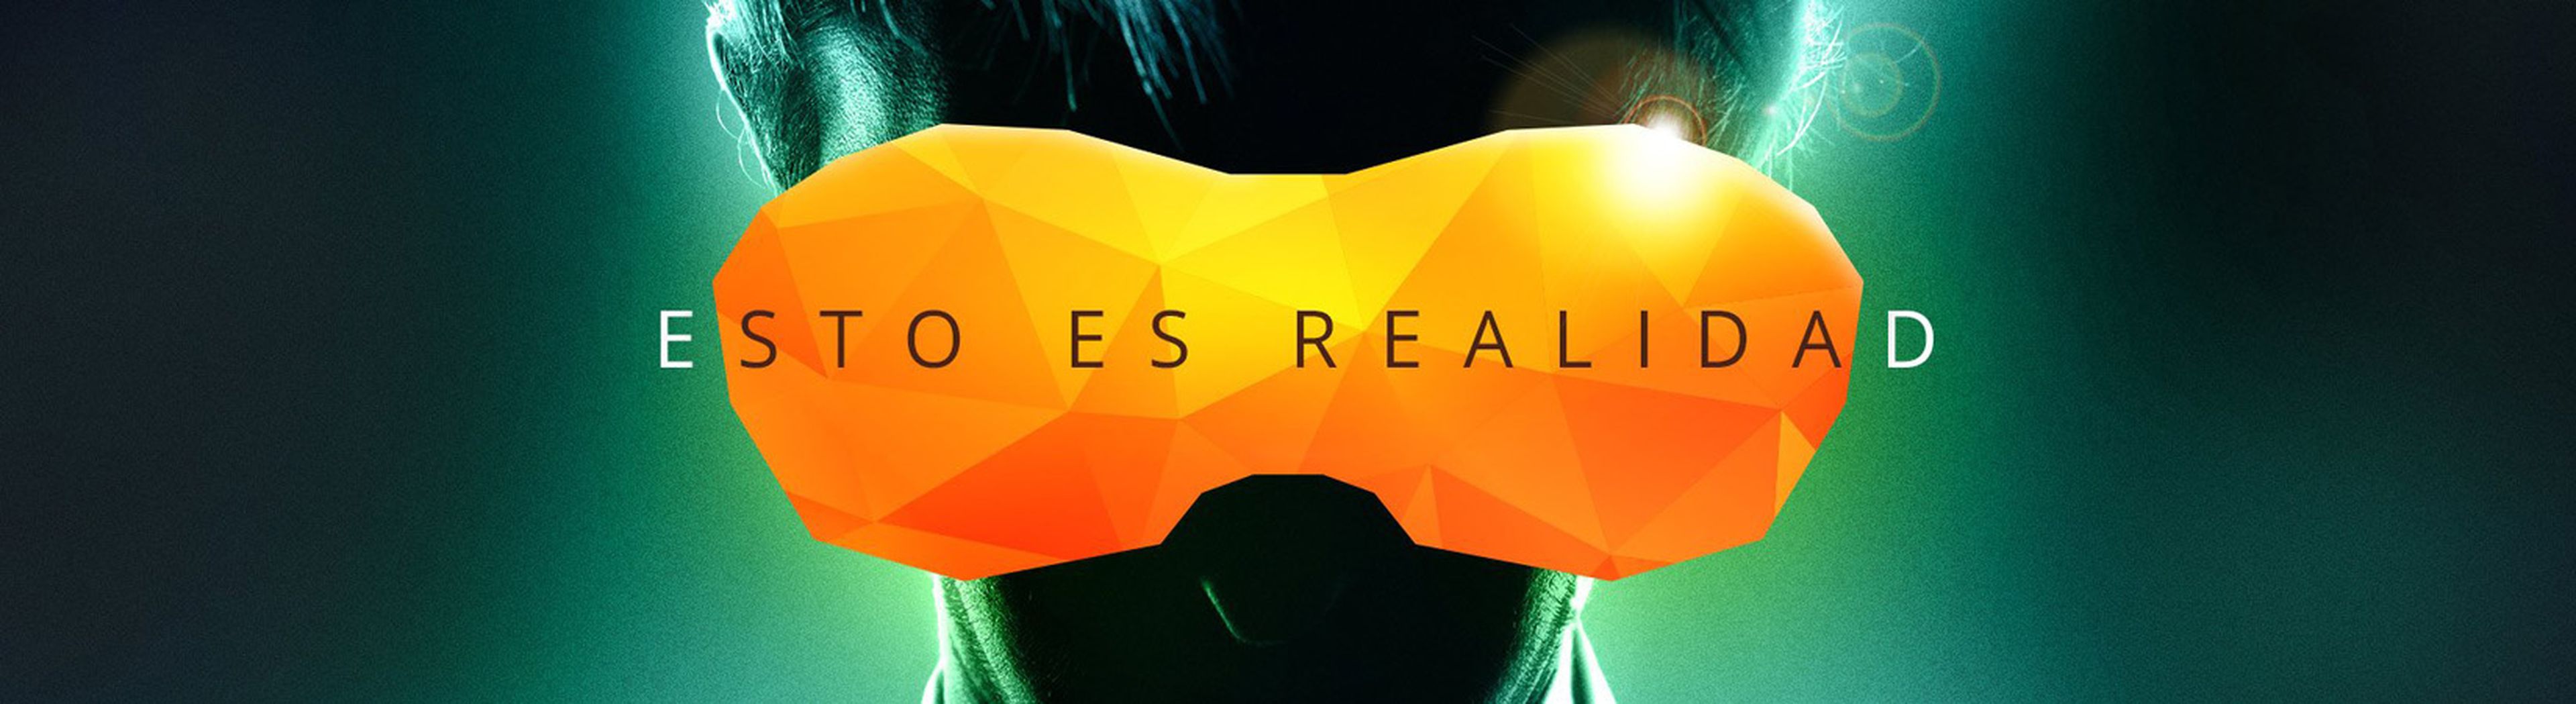 Amazon realidad virtual